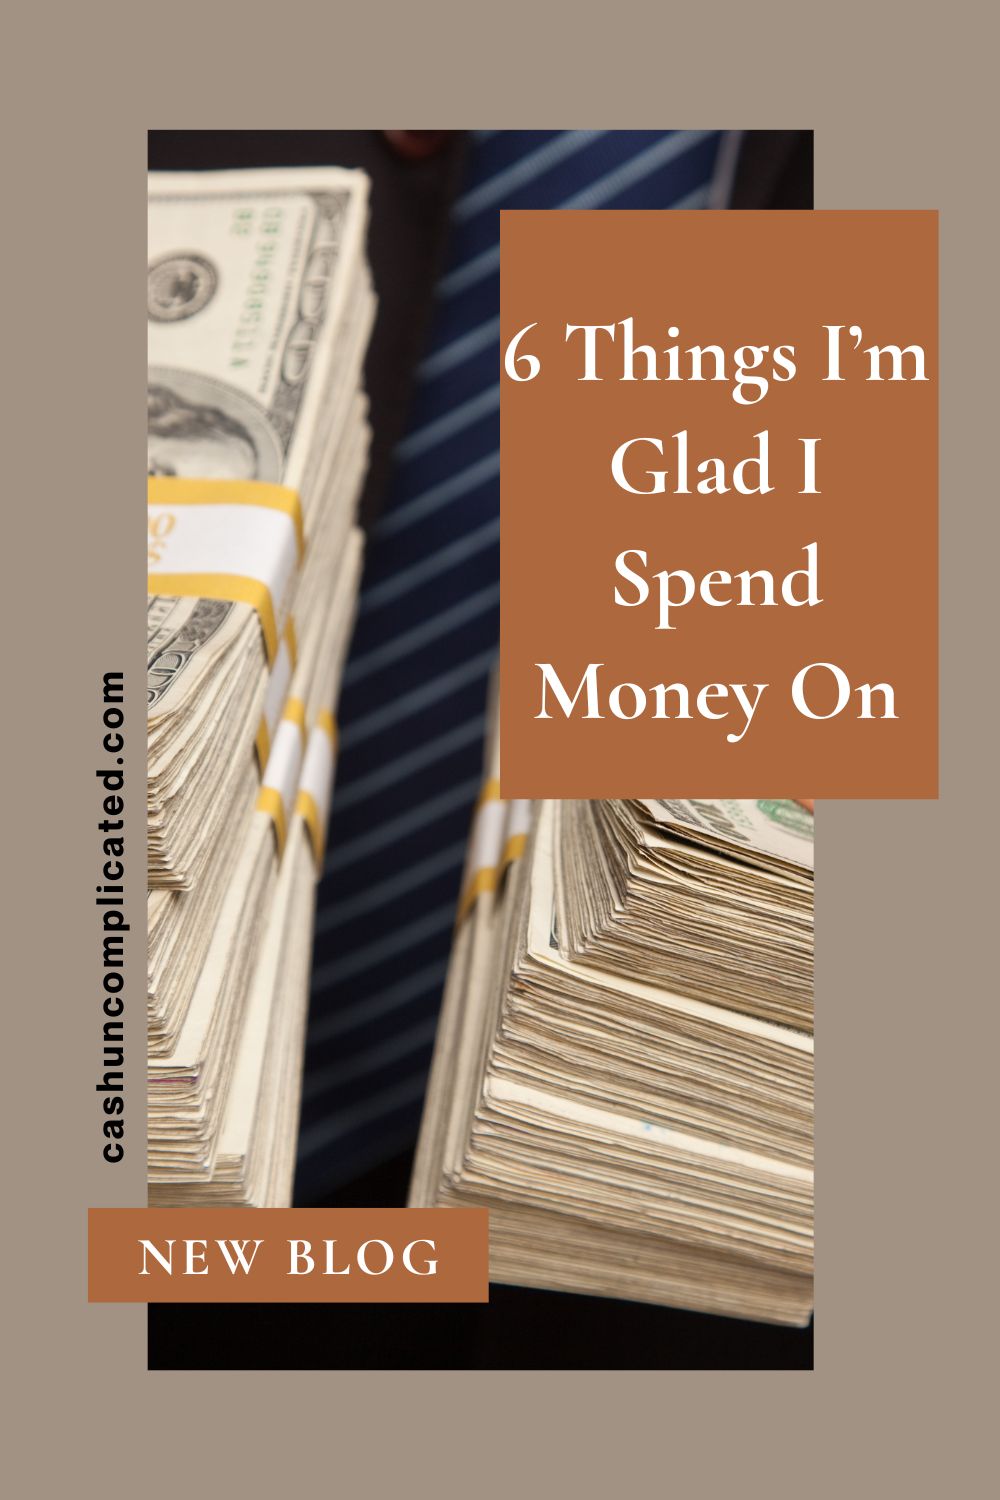 Spending money